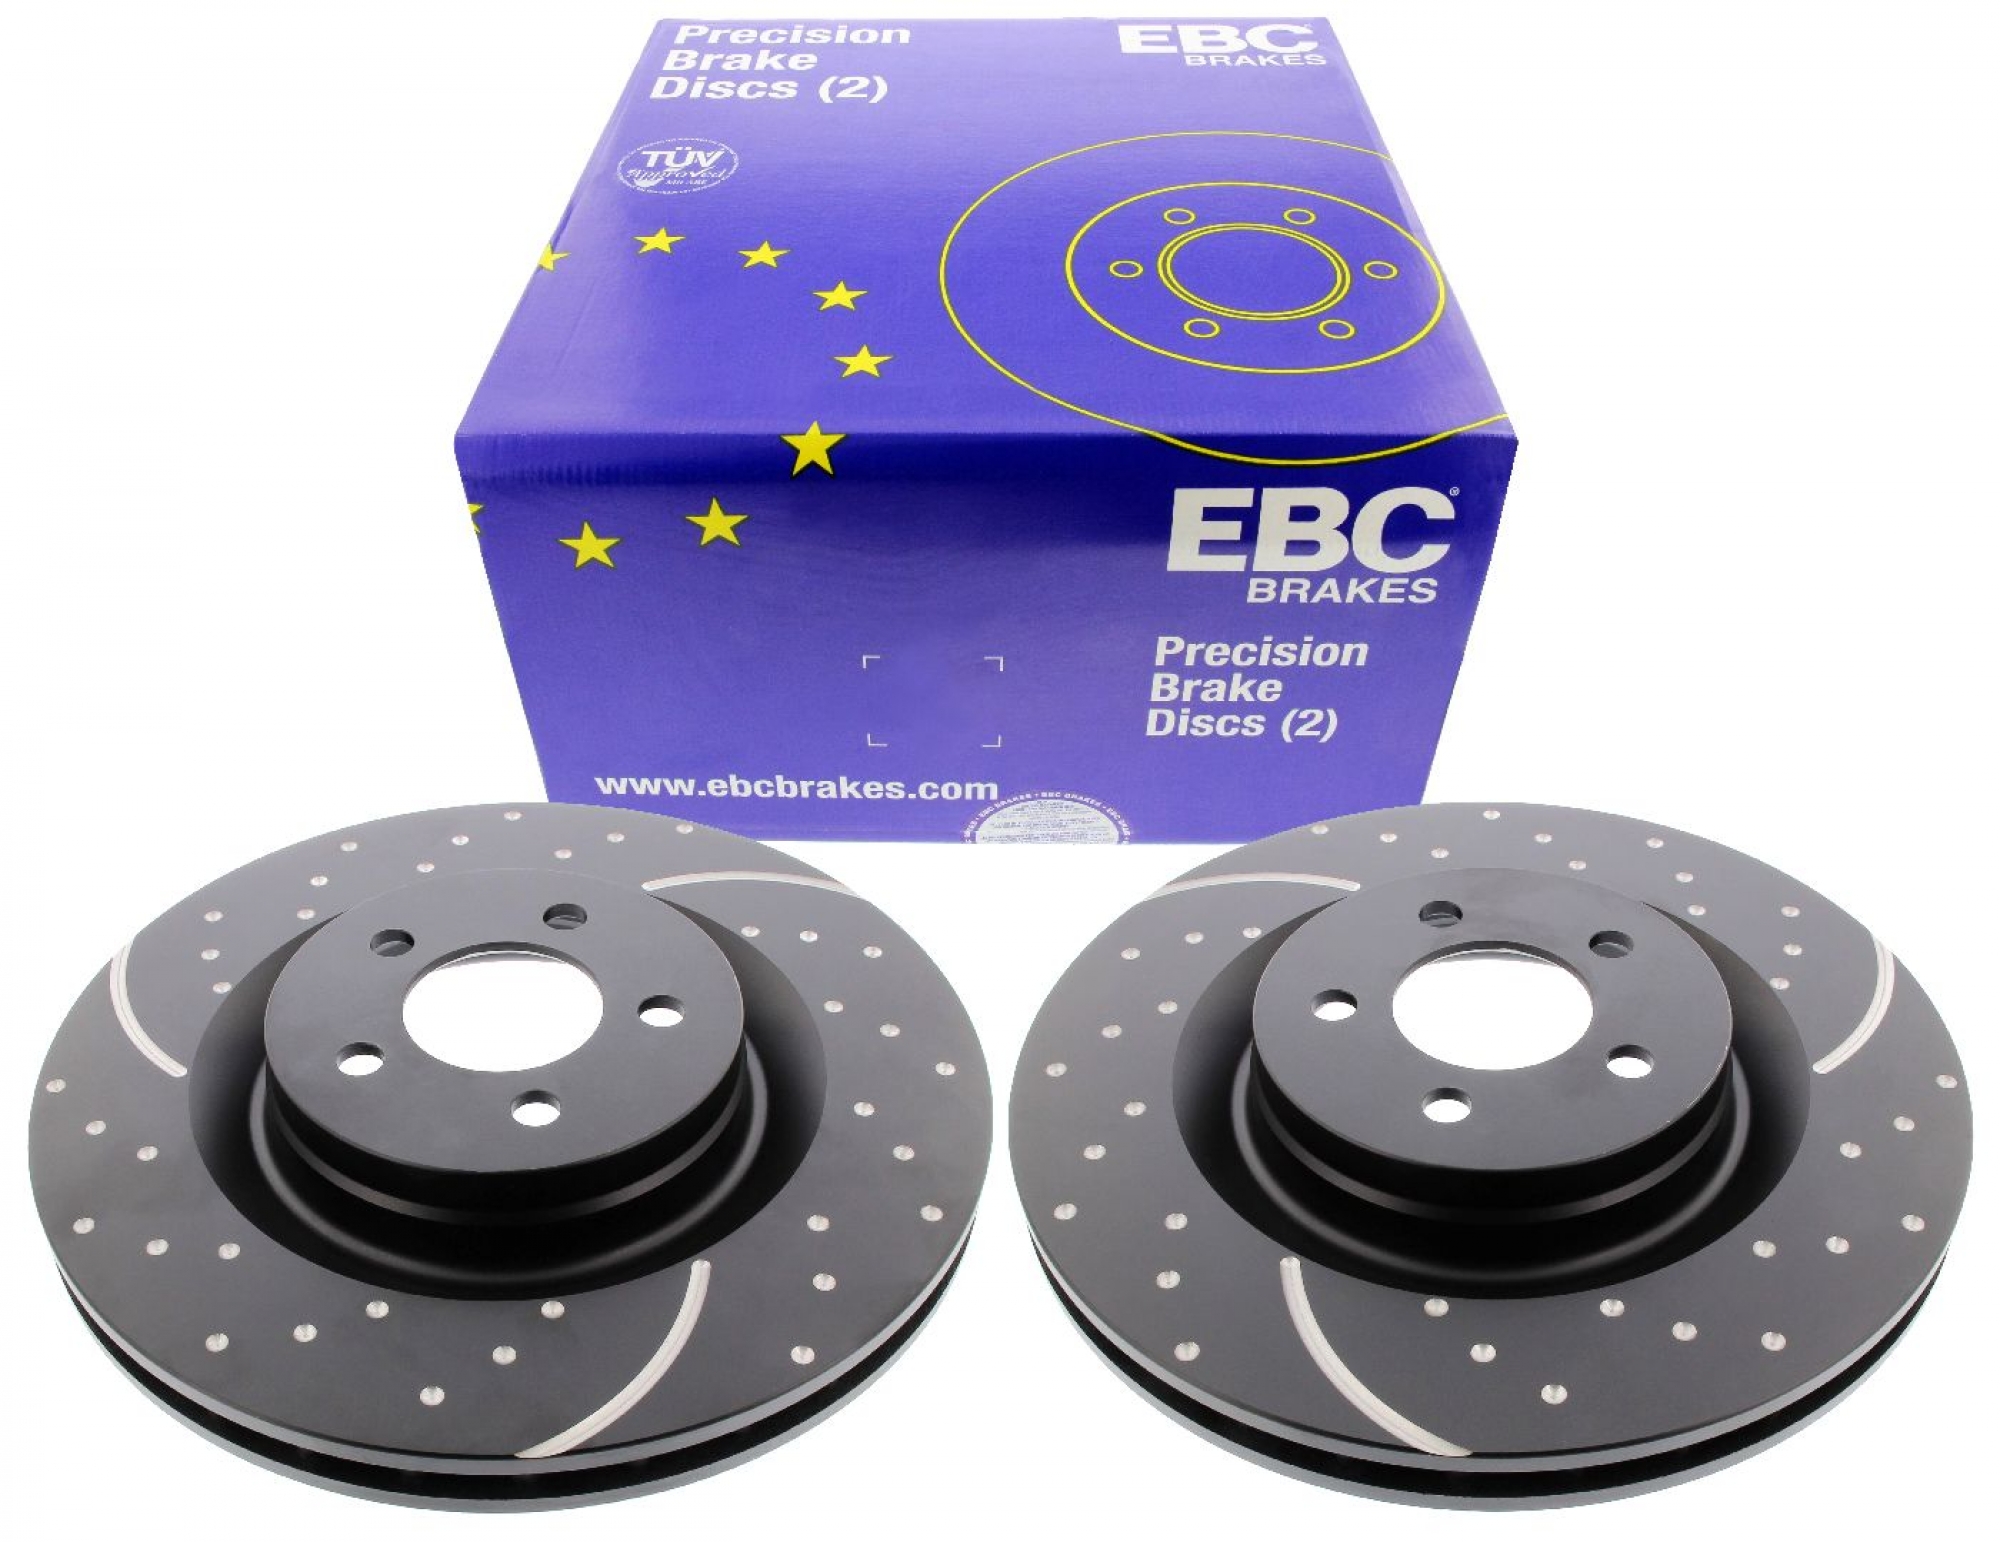 EBC-Bremsscheiben, Turbo Groove Disc Black (2-teilig), VA, Chrysler, Dodge (360mm)